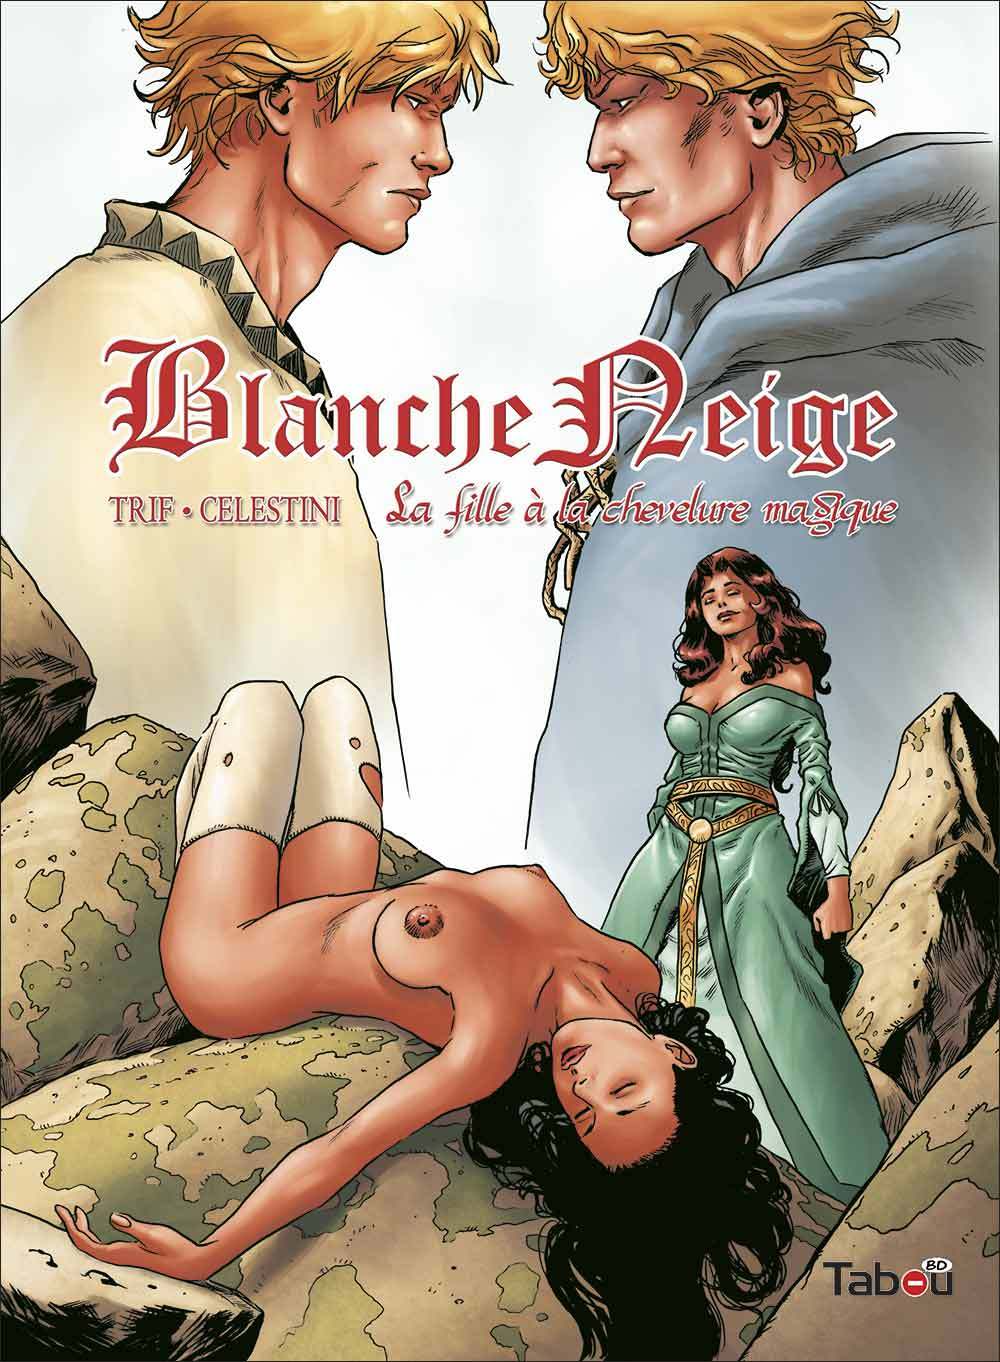 Kniha Blanche neige (tome 3) TRIF